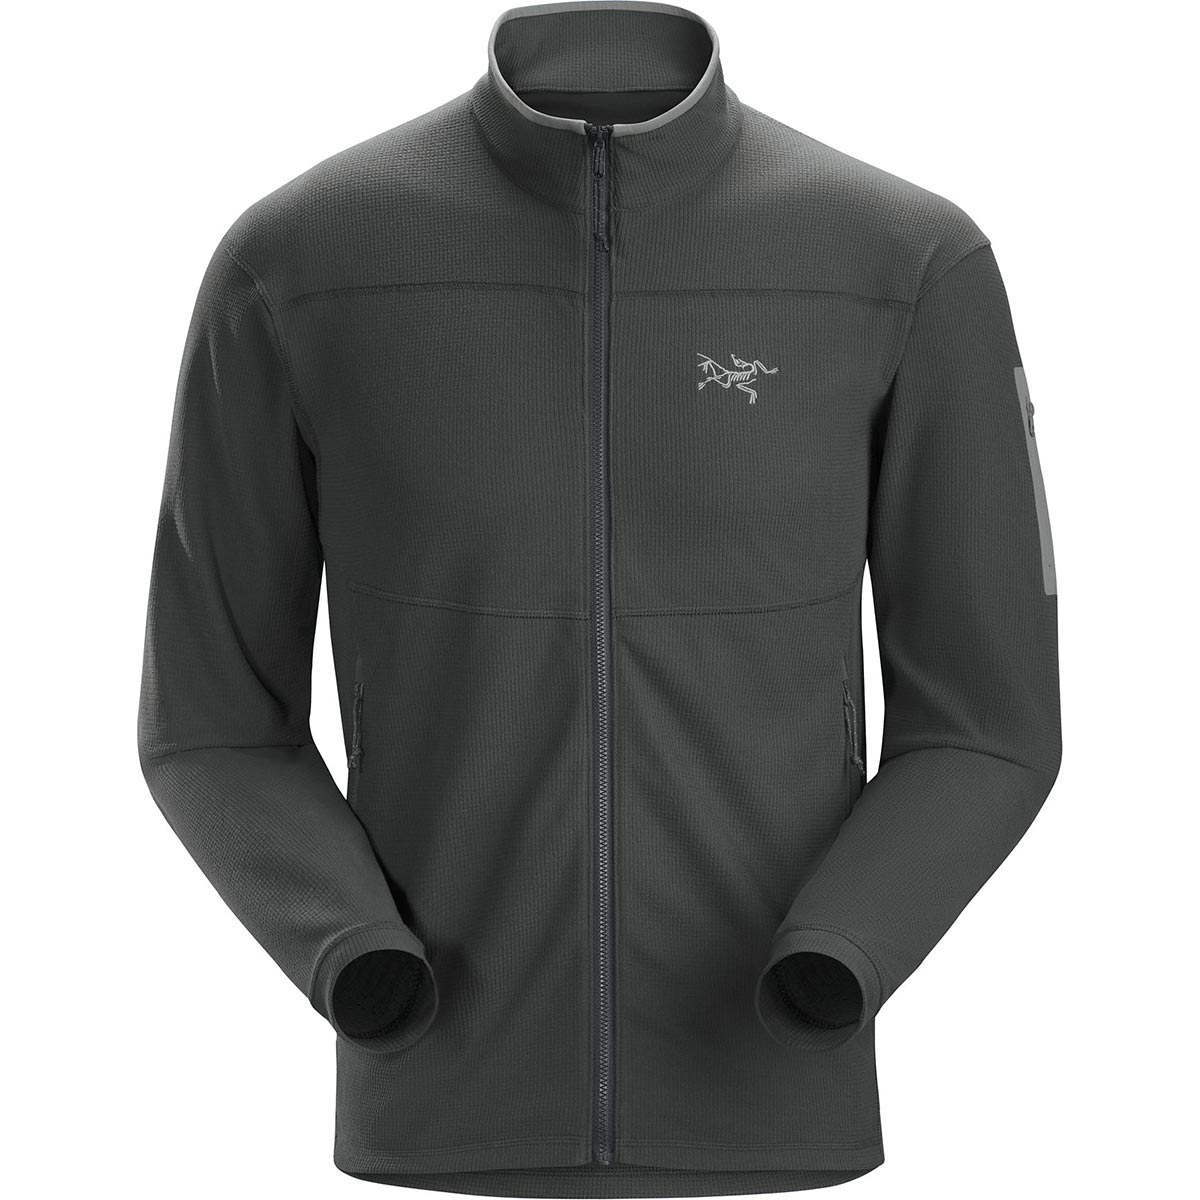 Arc'teryx Delta LT Jacket, men's, discontinued colors (free ground ...